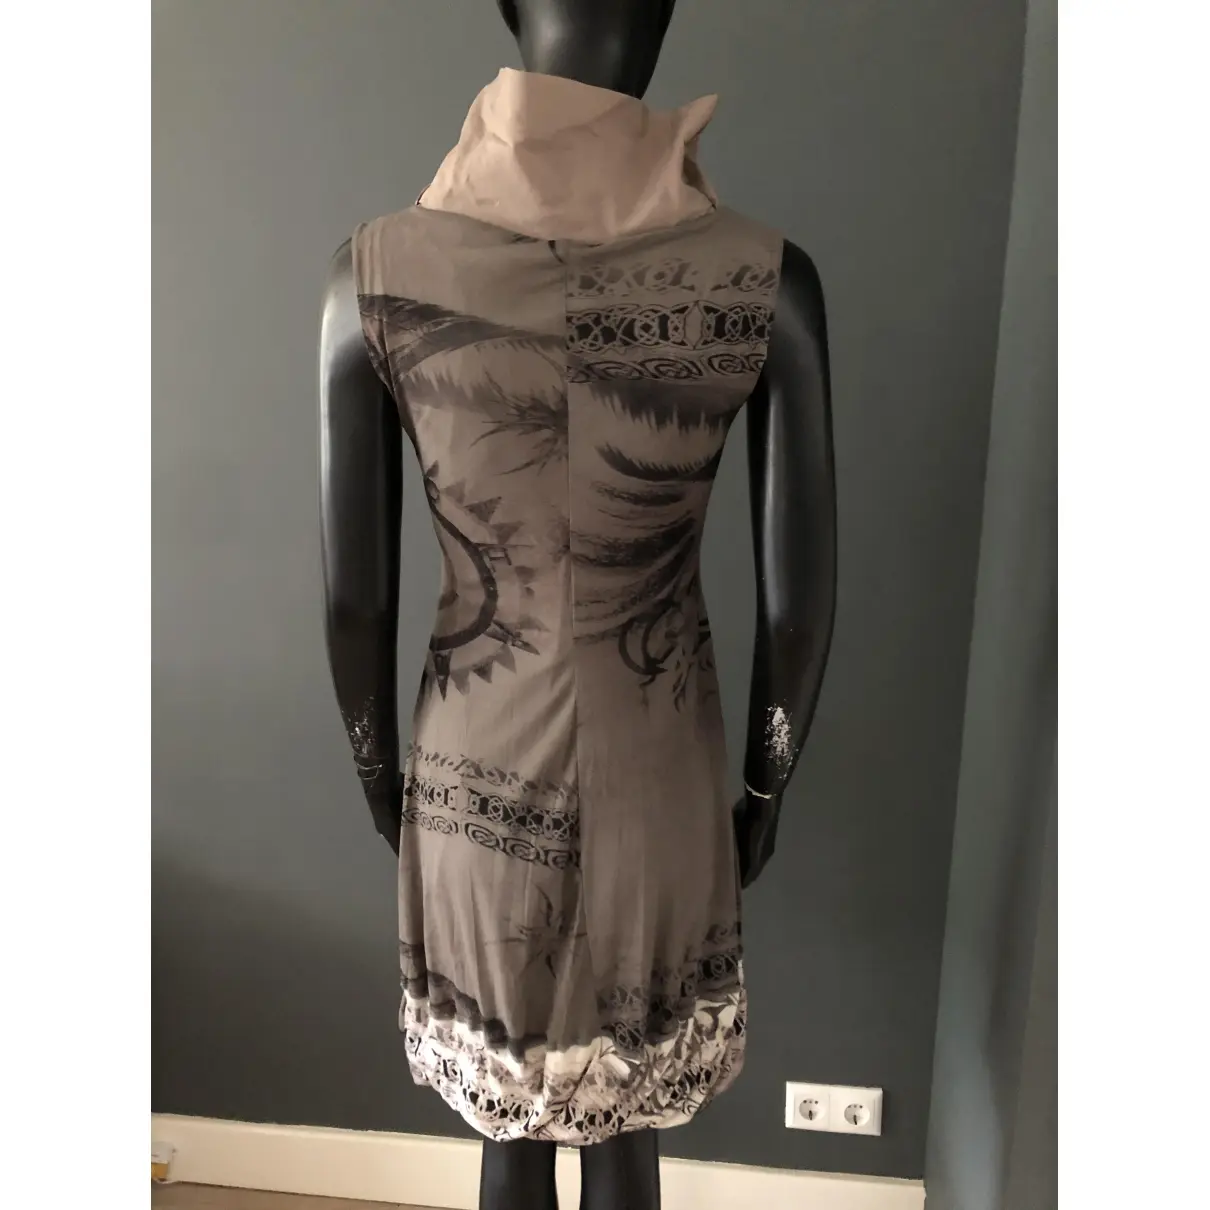 Buy Sistes Mid-length dress online